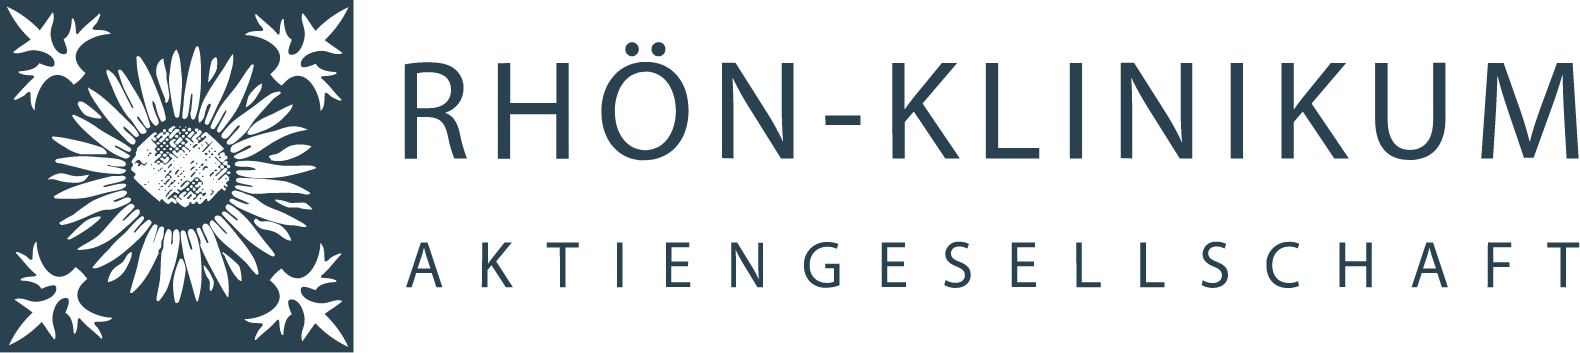 Rhön-Klinikum logo large (transparent PNG)